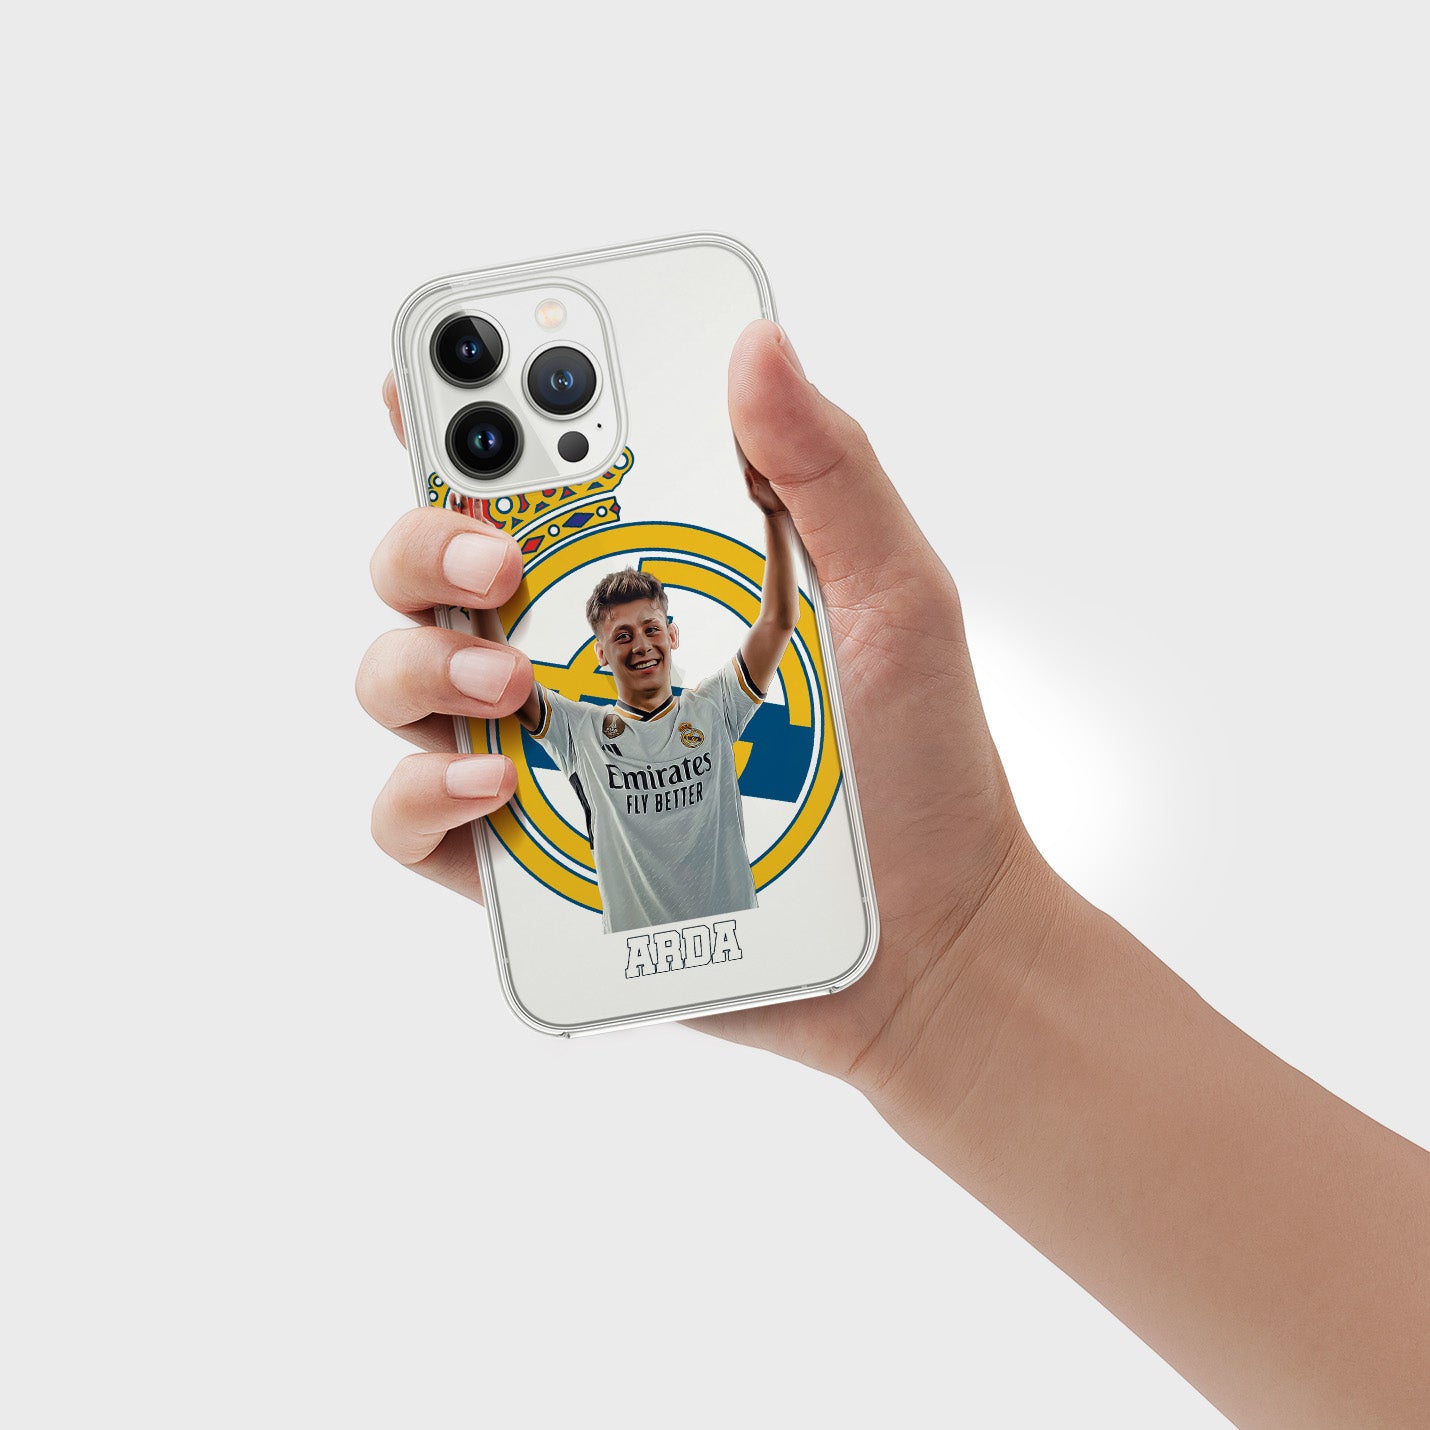 Arda Güler Real Madrid Hülle mit Wunschname - 1instaphone